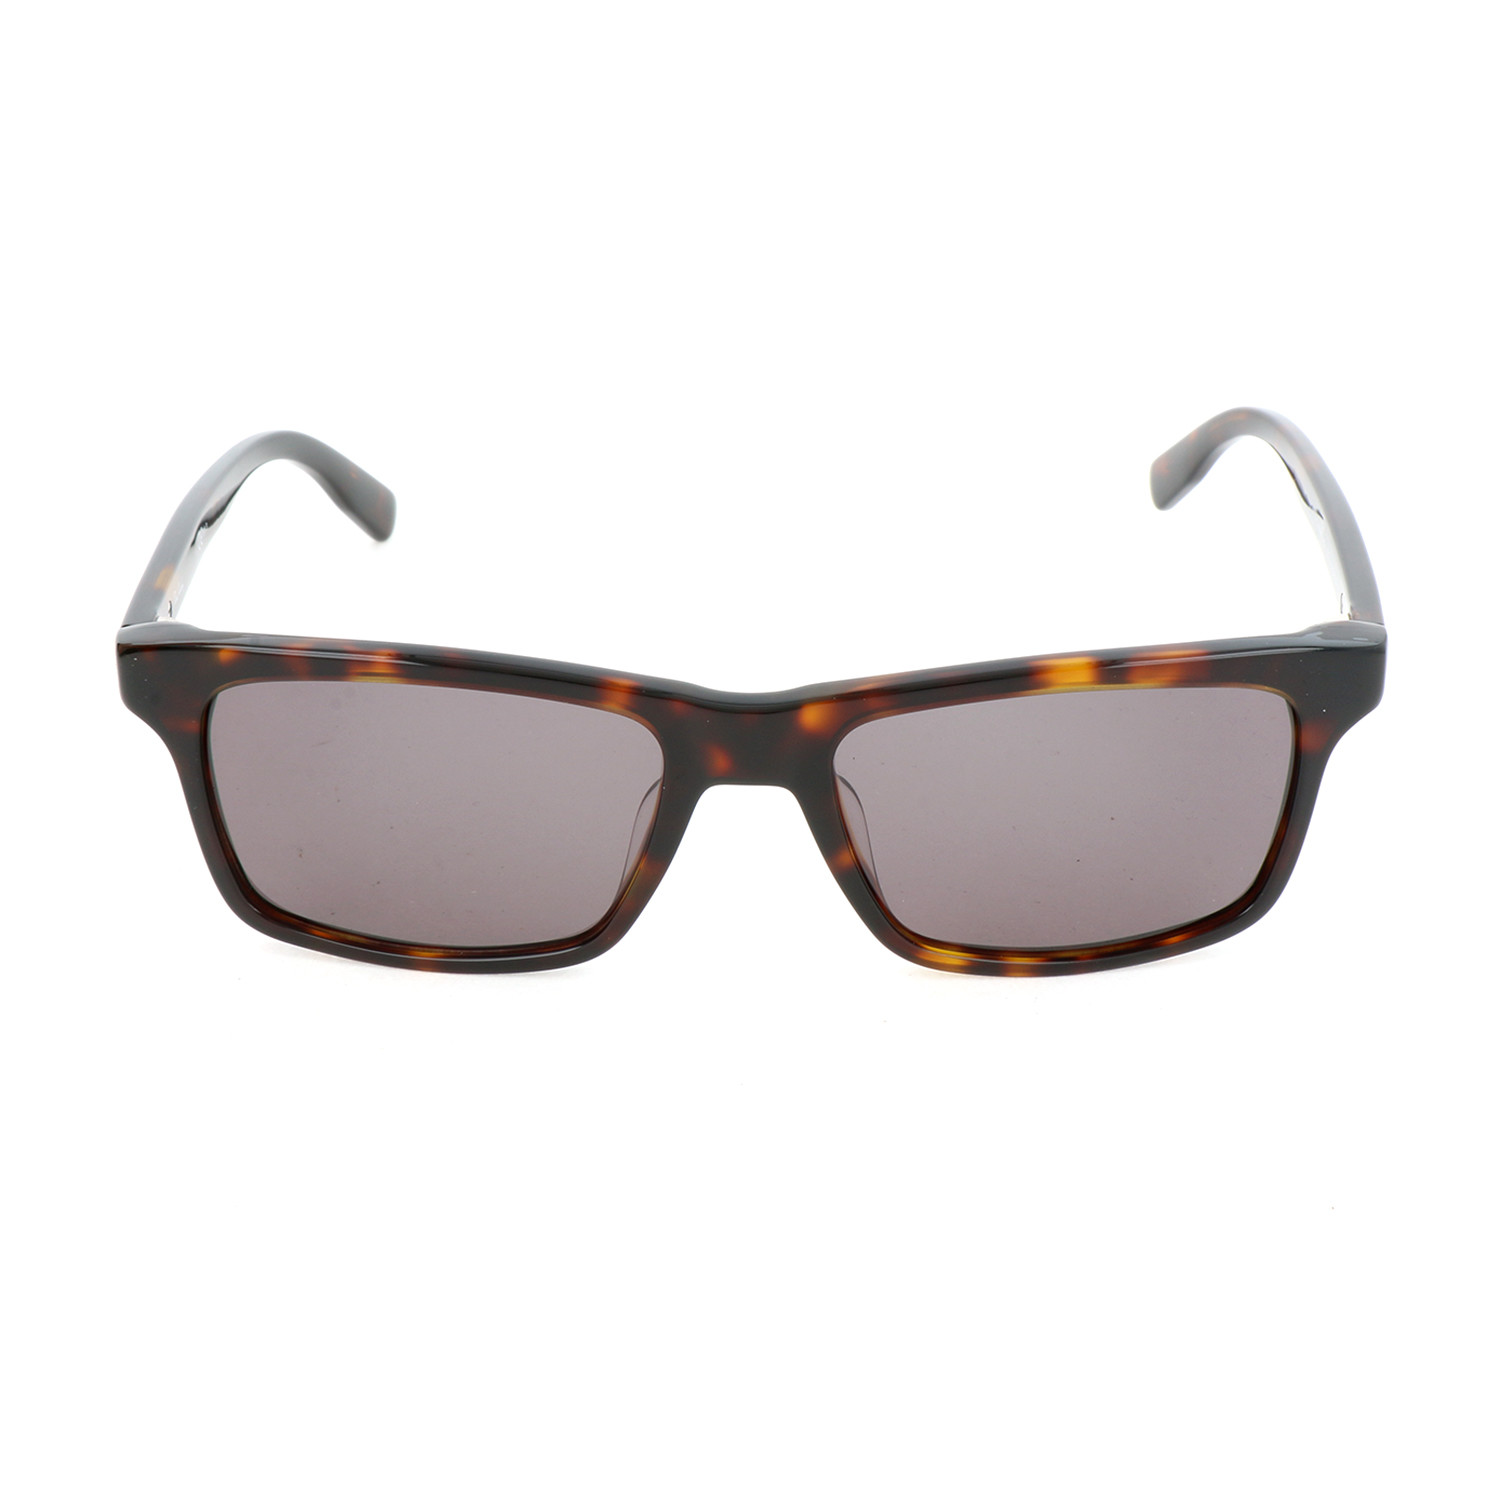 Pierre Cardin Men's Sunglasses // 6189 // Dark Havana - Pierre Cardin